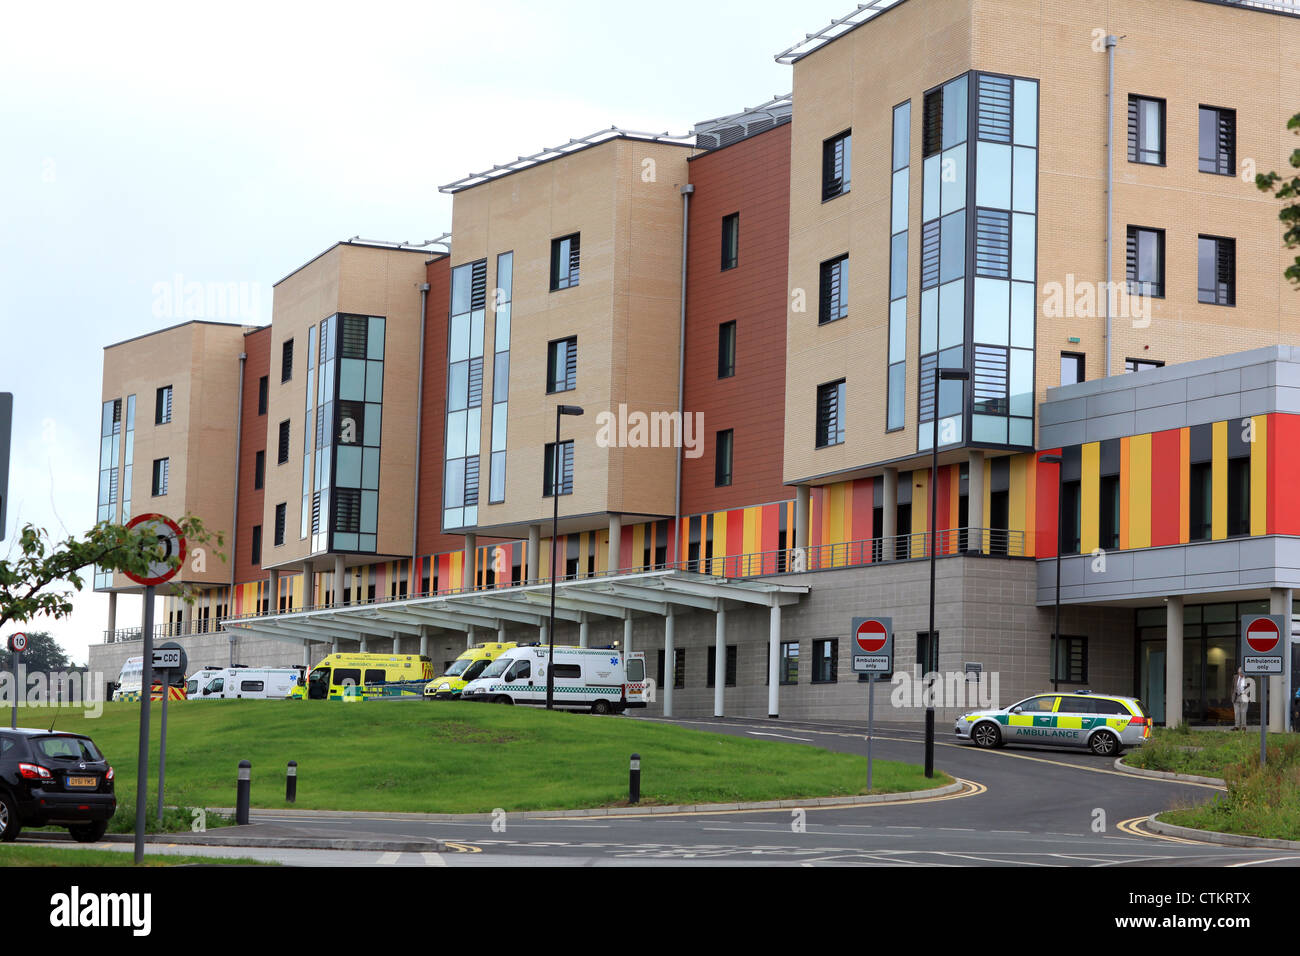 The University Hospital of North Staffordshire - Emergency Unit Stock Photo